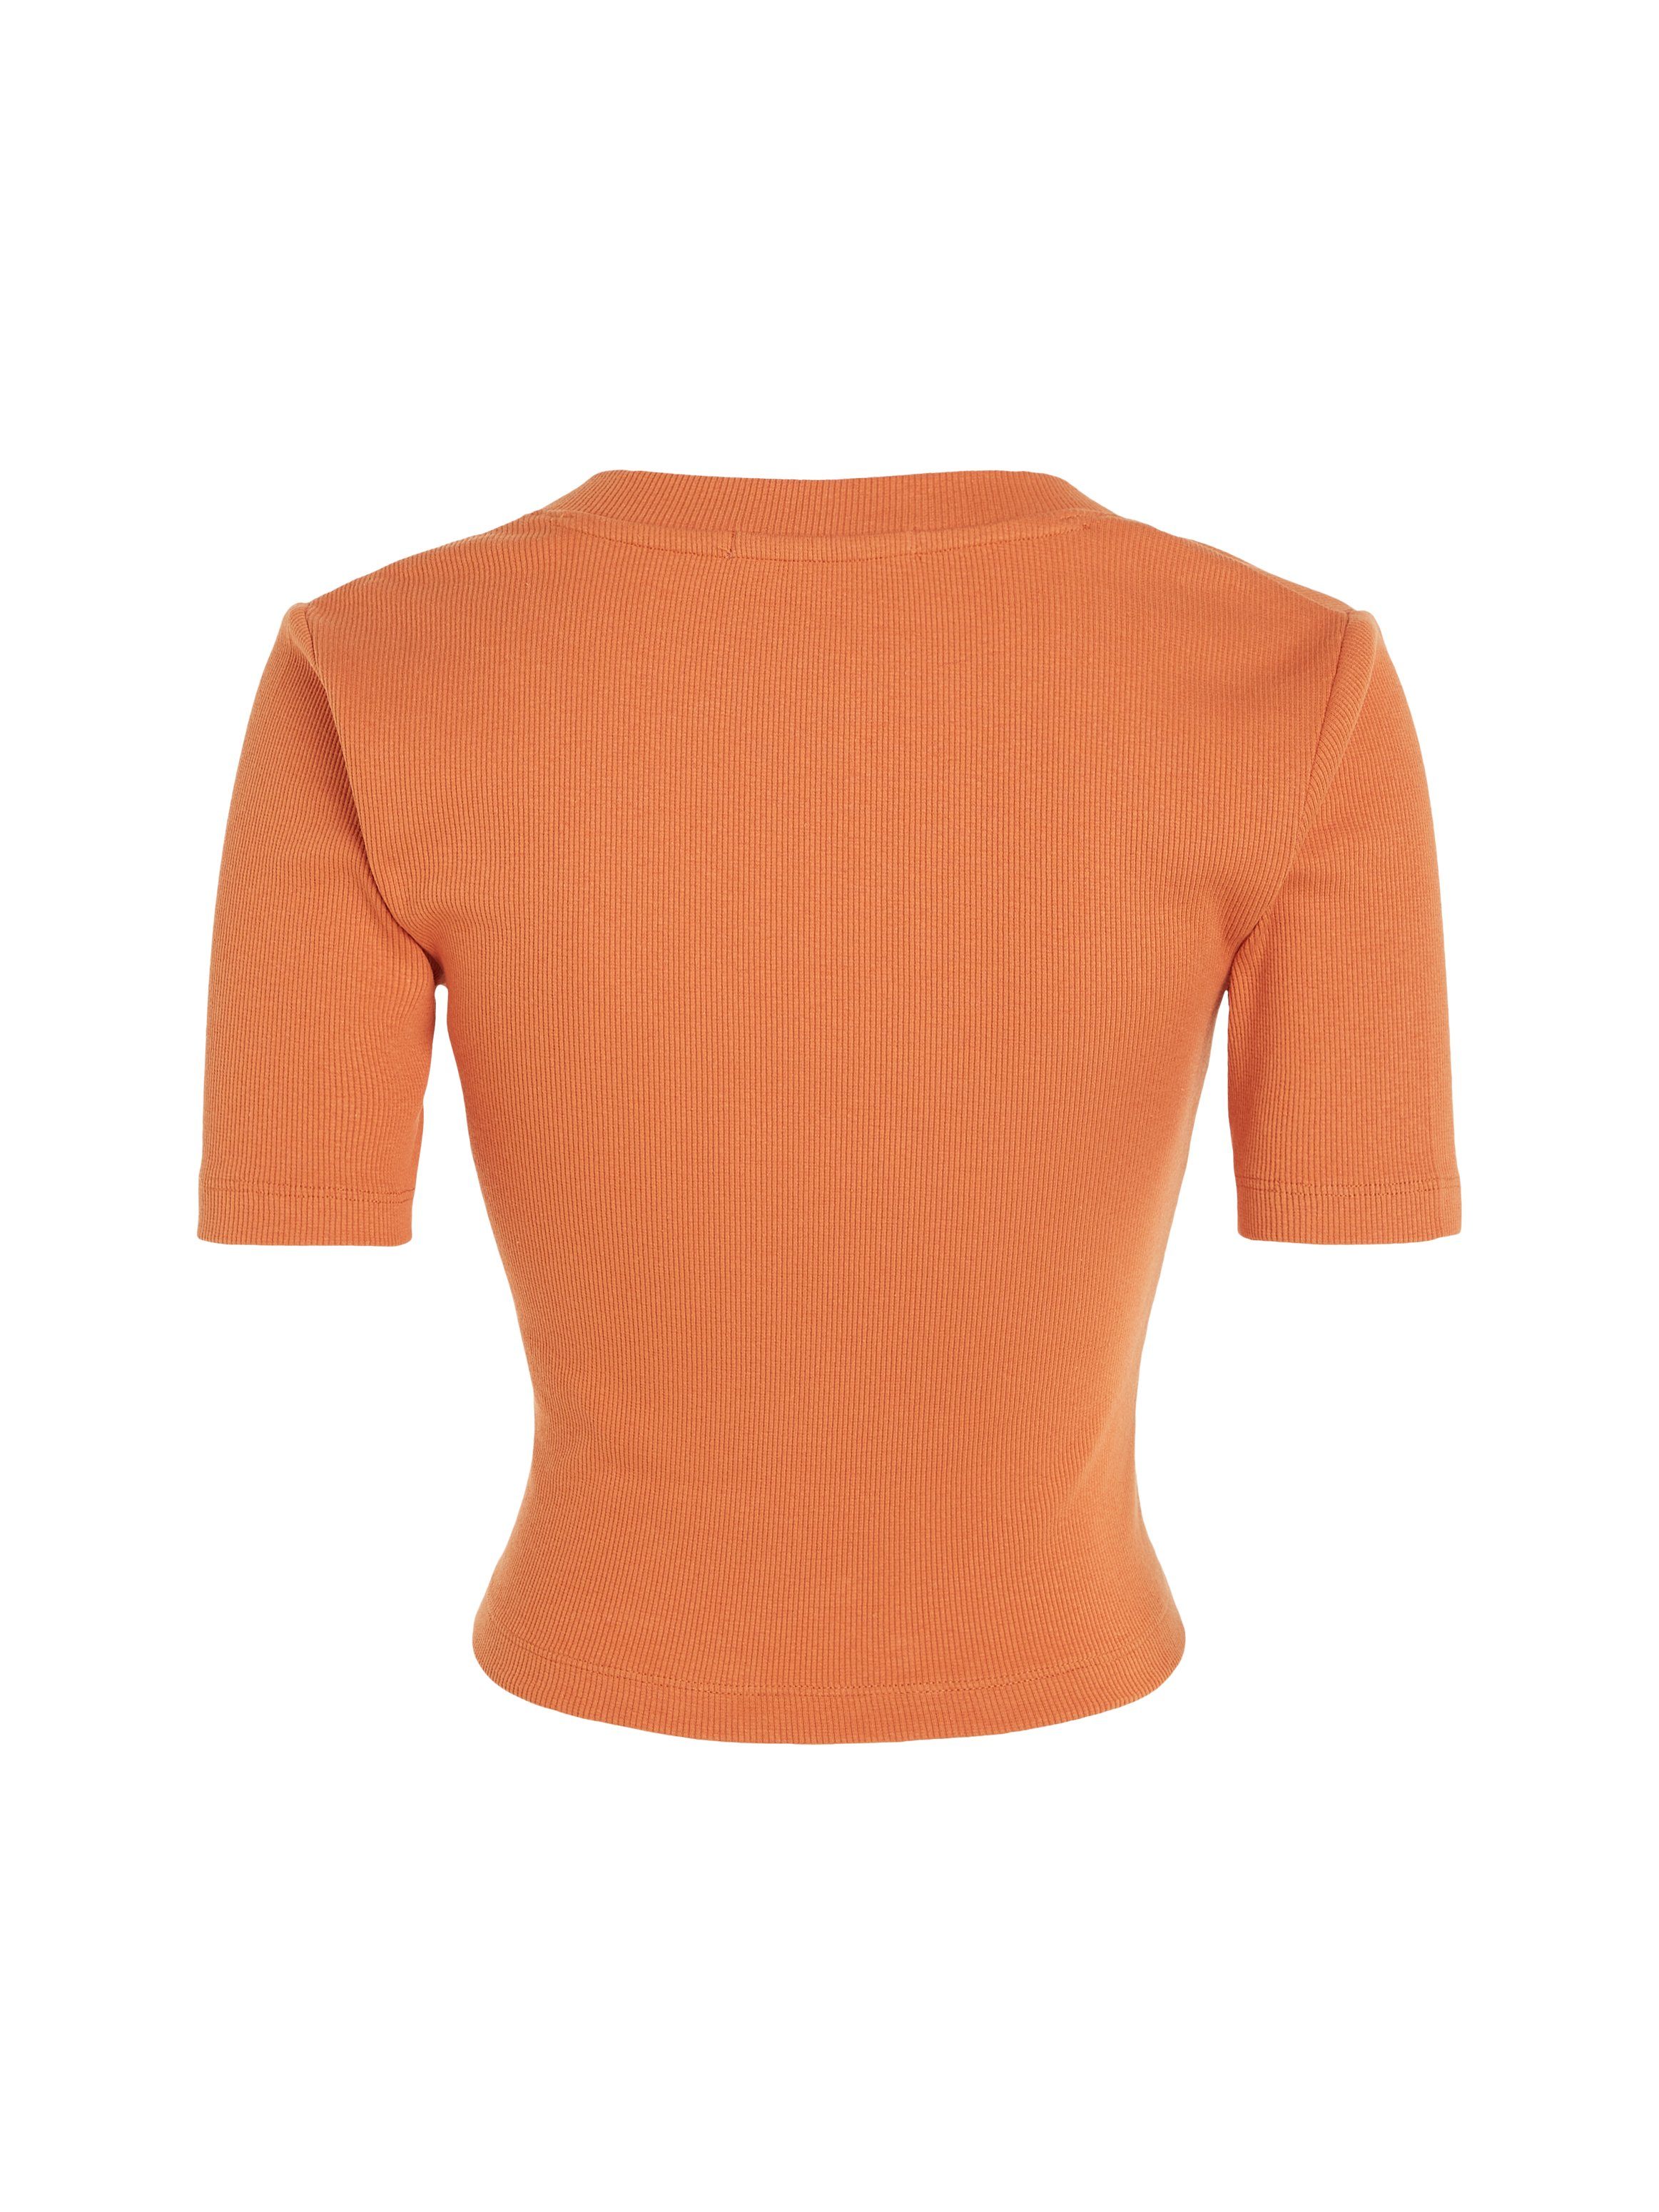 Calvin Klein Jeans orange V-Shirt